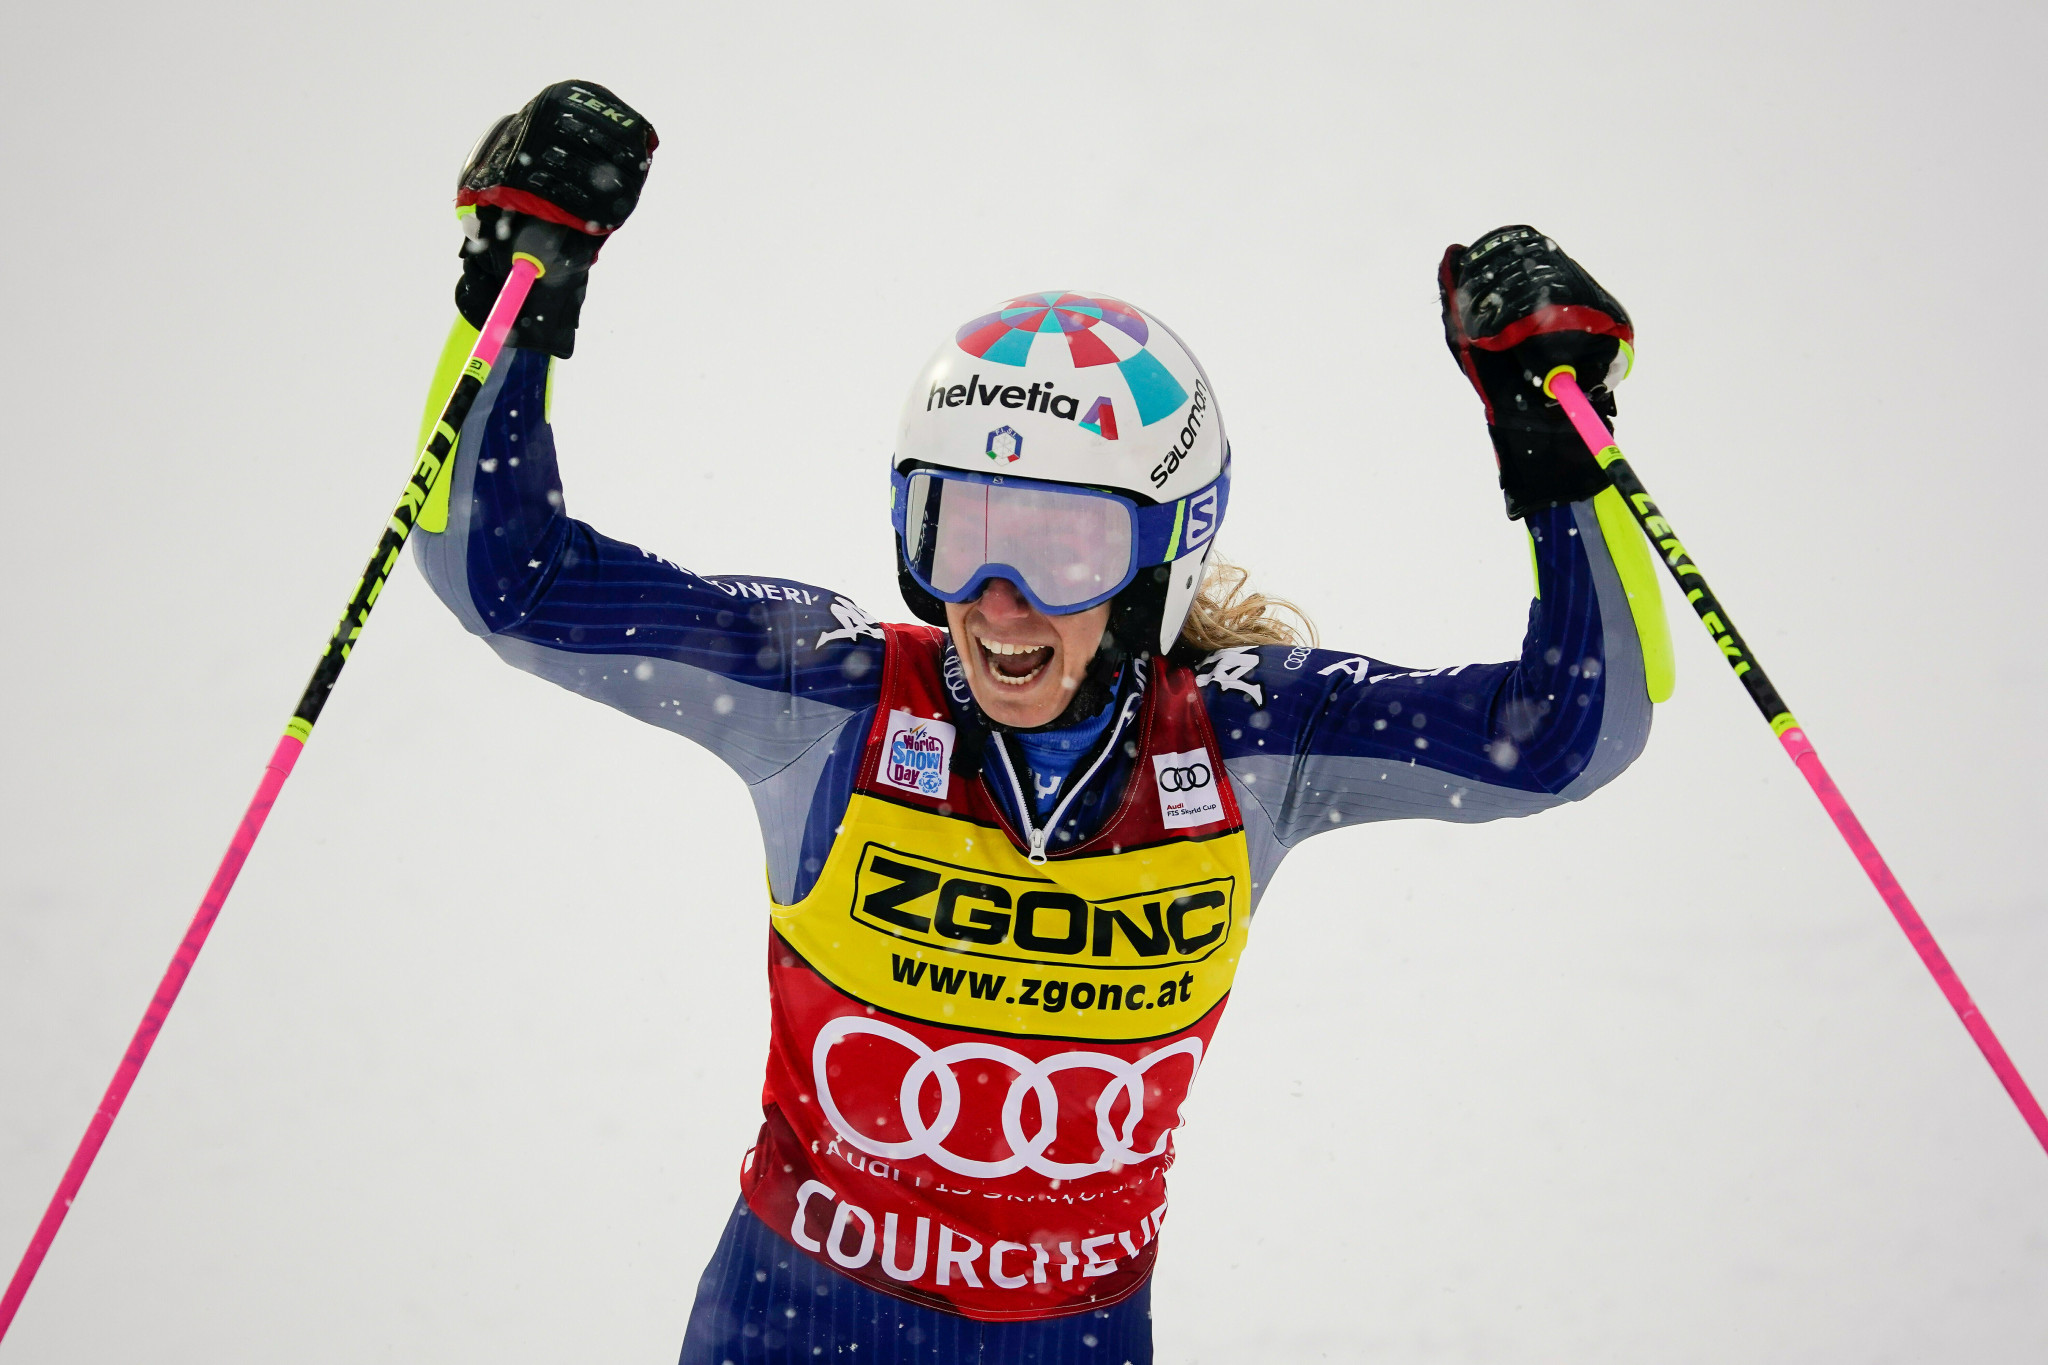 Bassino earns second giant slalom victory of FIS Alpine Ski World Cup season